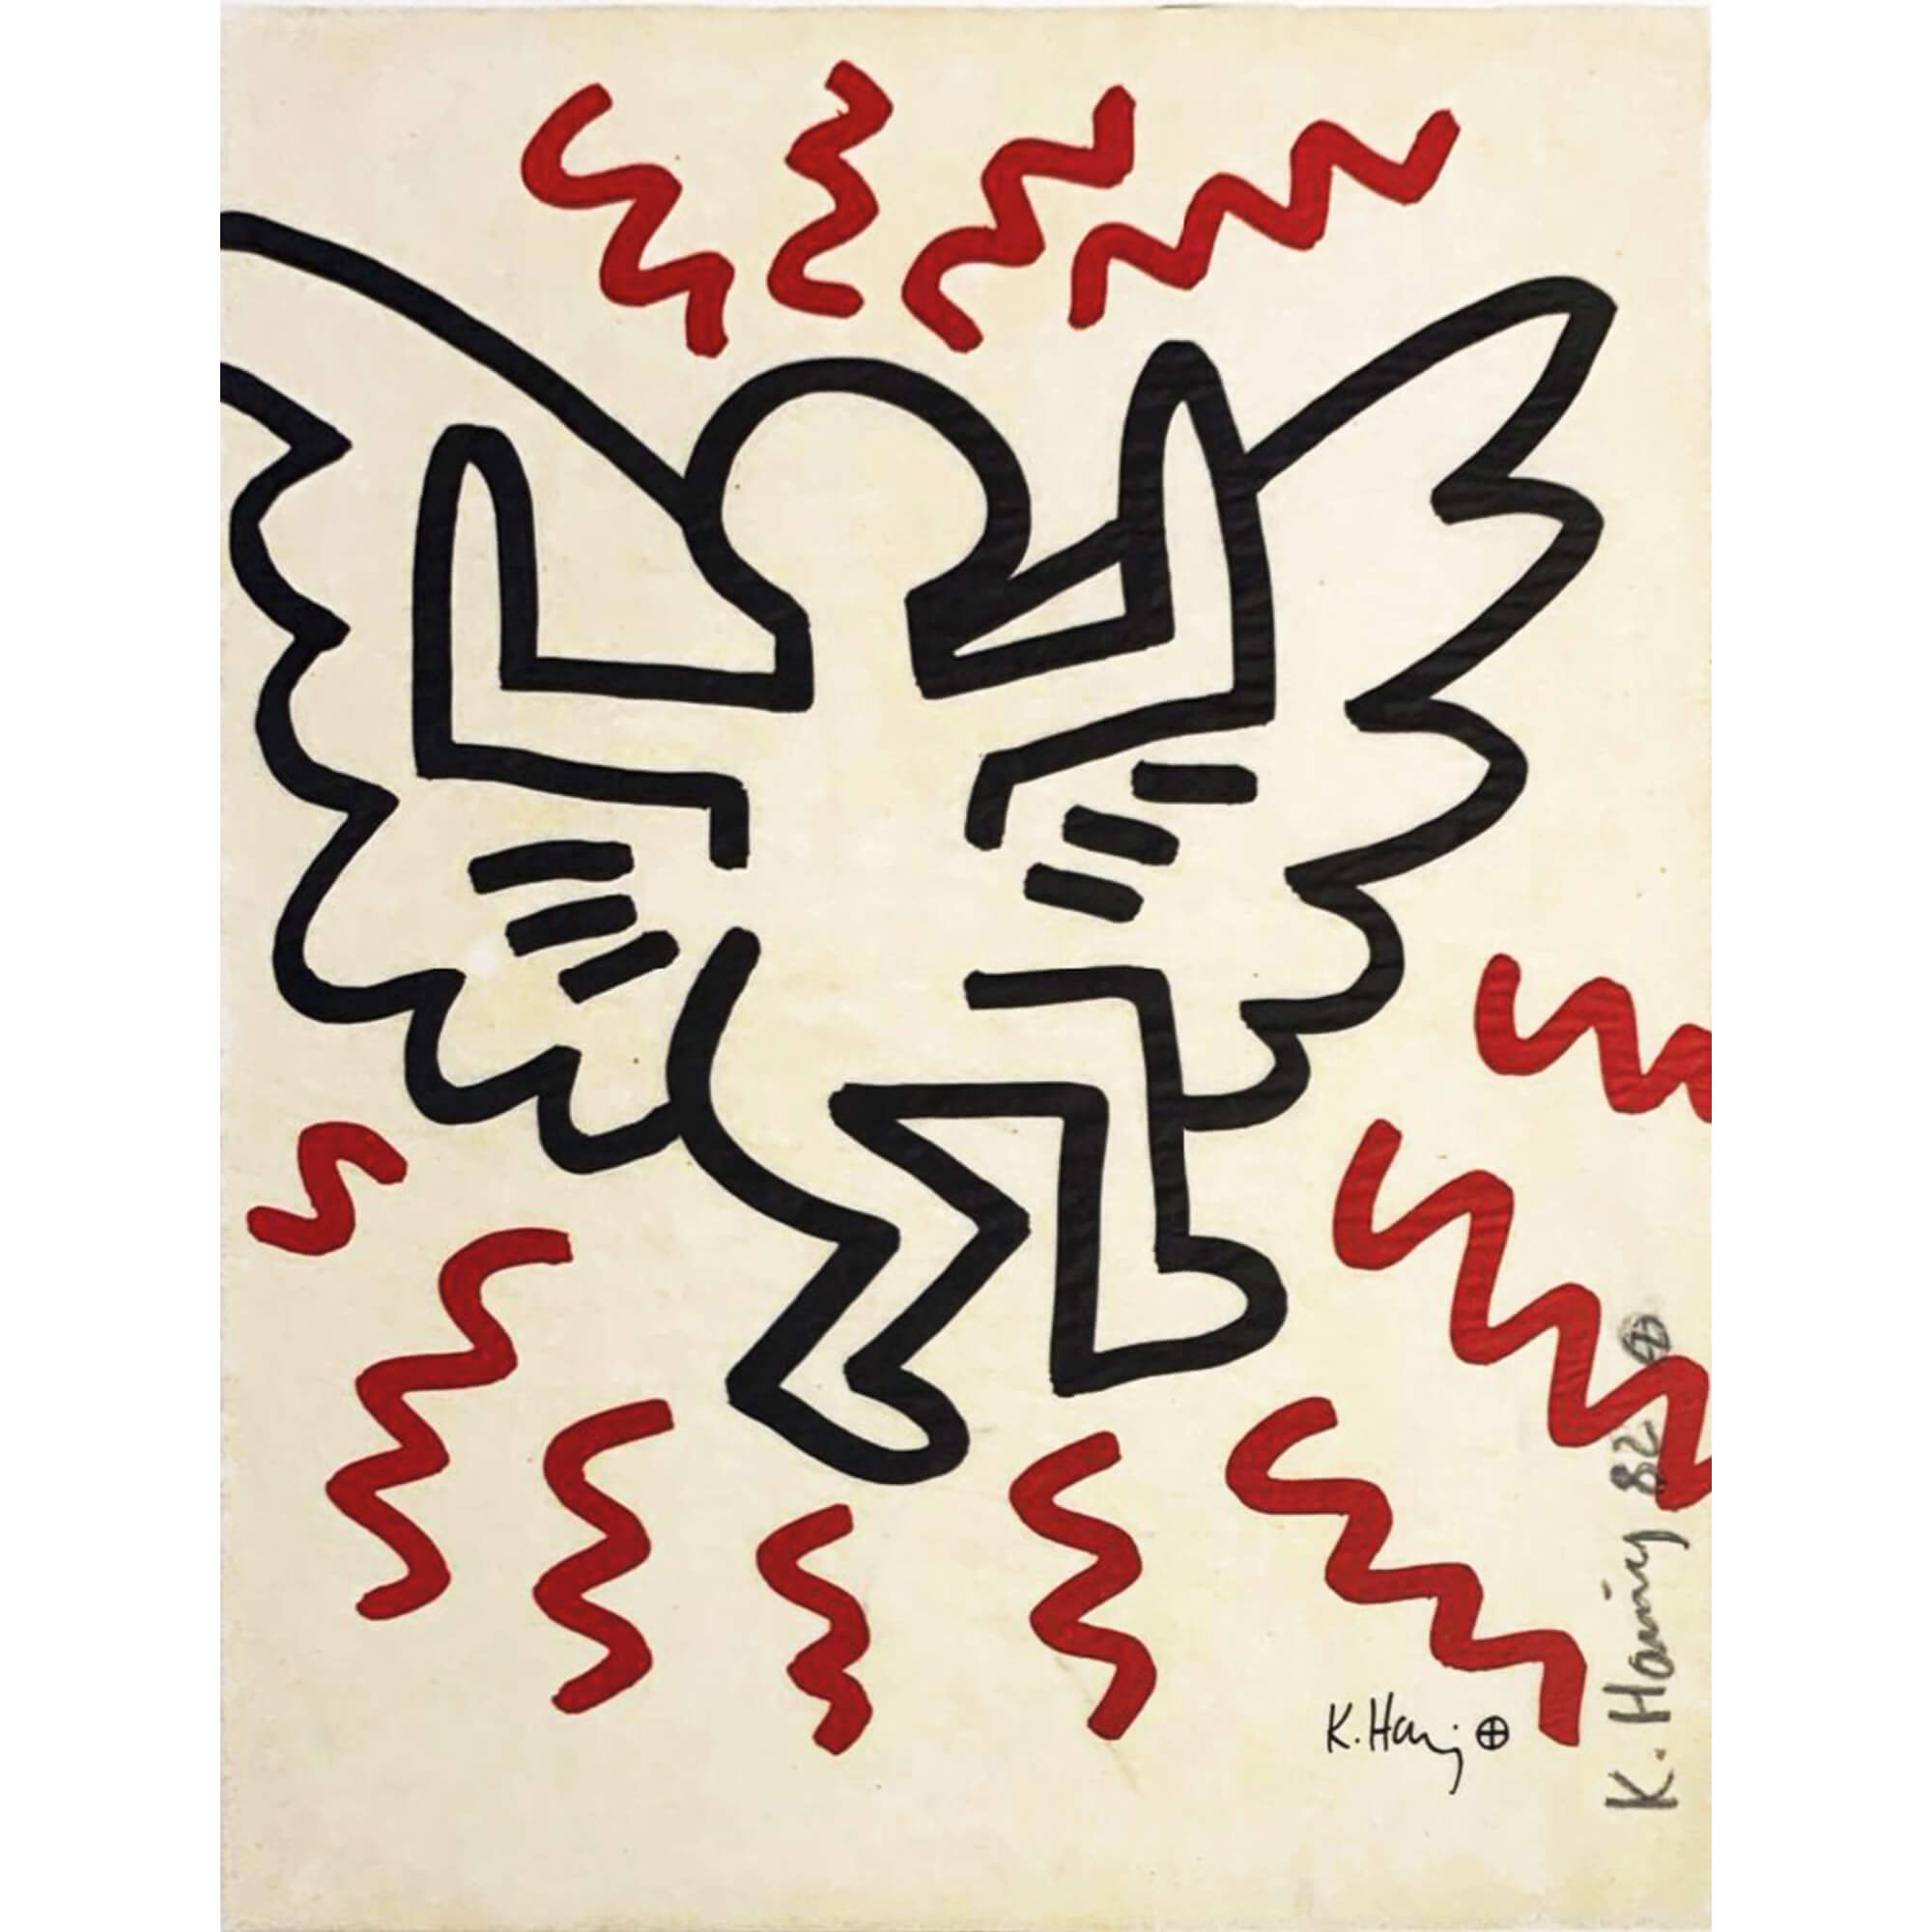 Keith Haring-Bayer Suite 3 - Keith Haring-art print